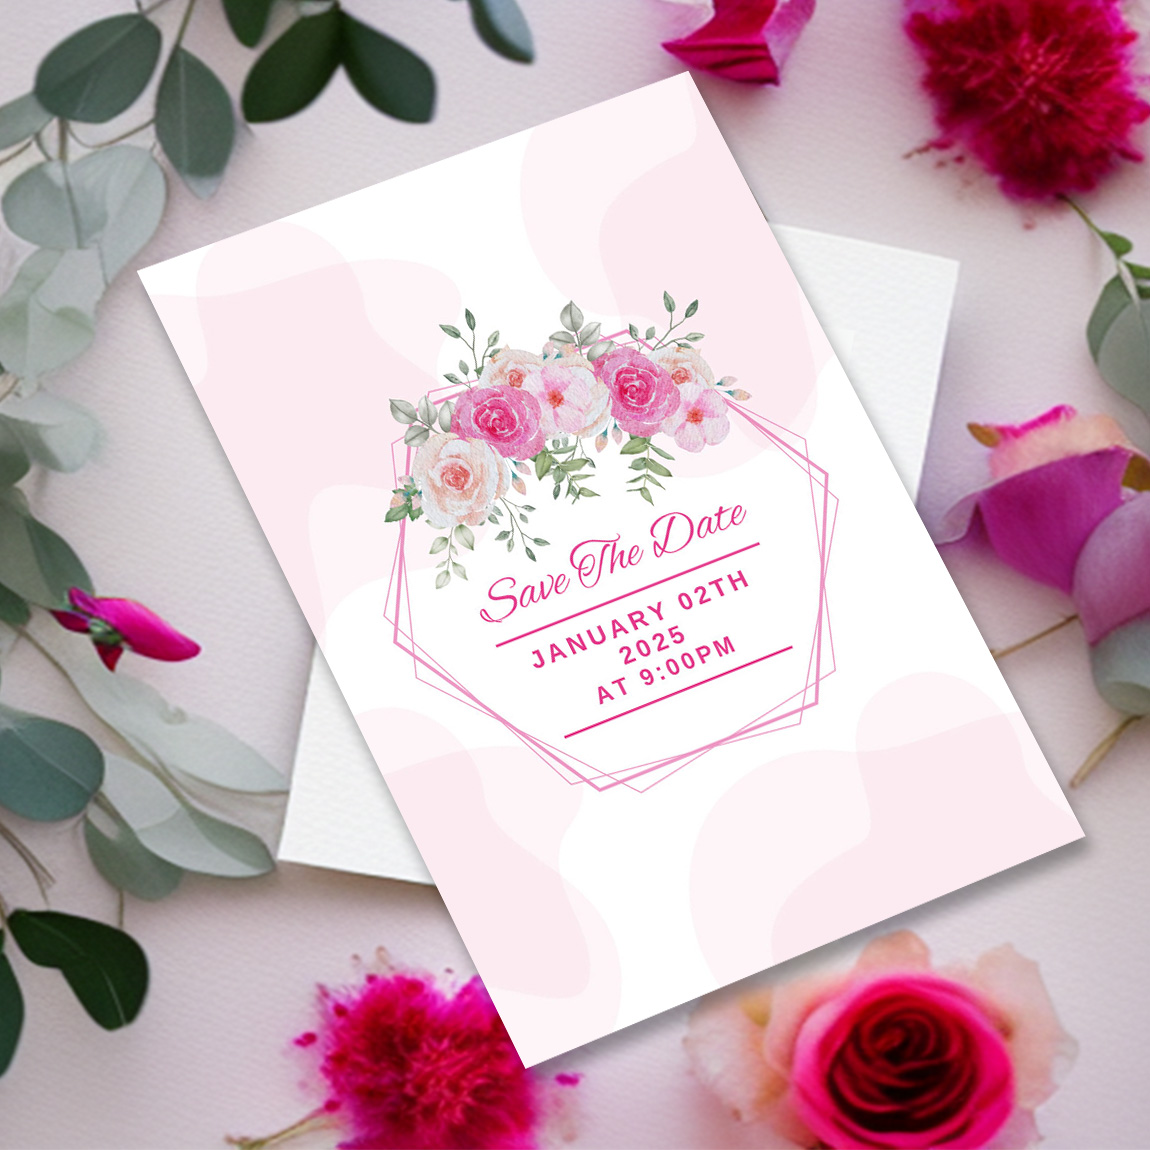 Soft Pink Color Floral Wedding Invitation Card Template - MasterBundles